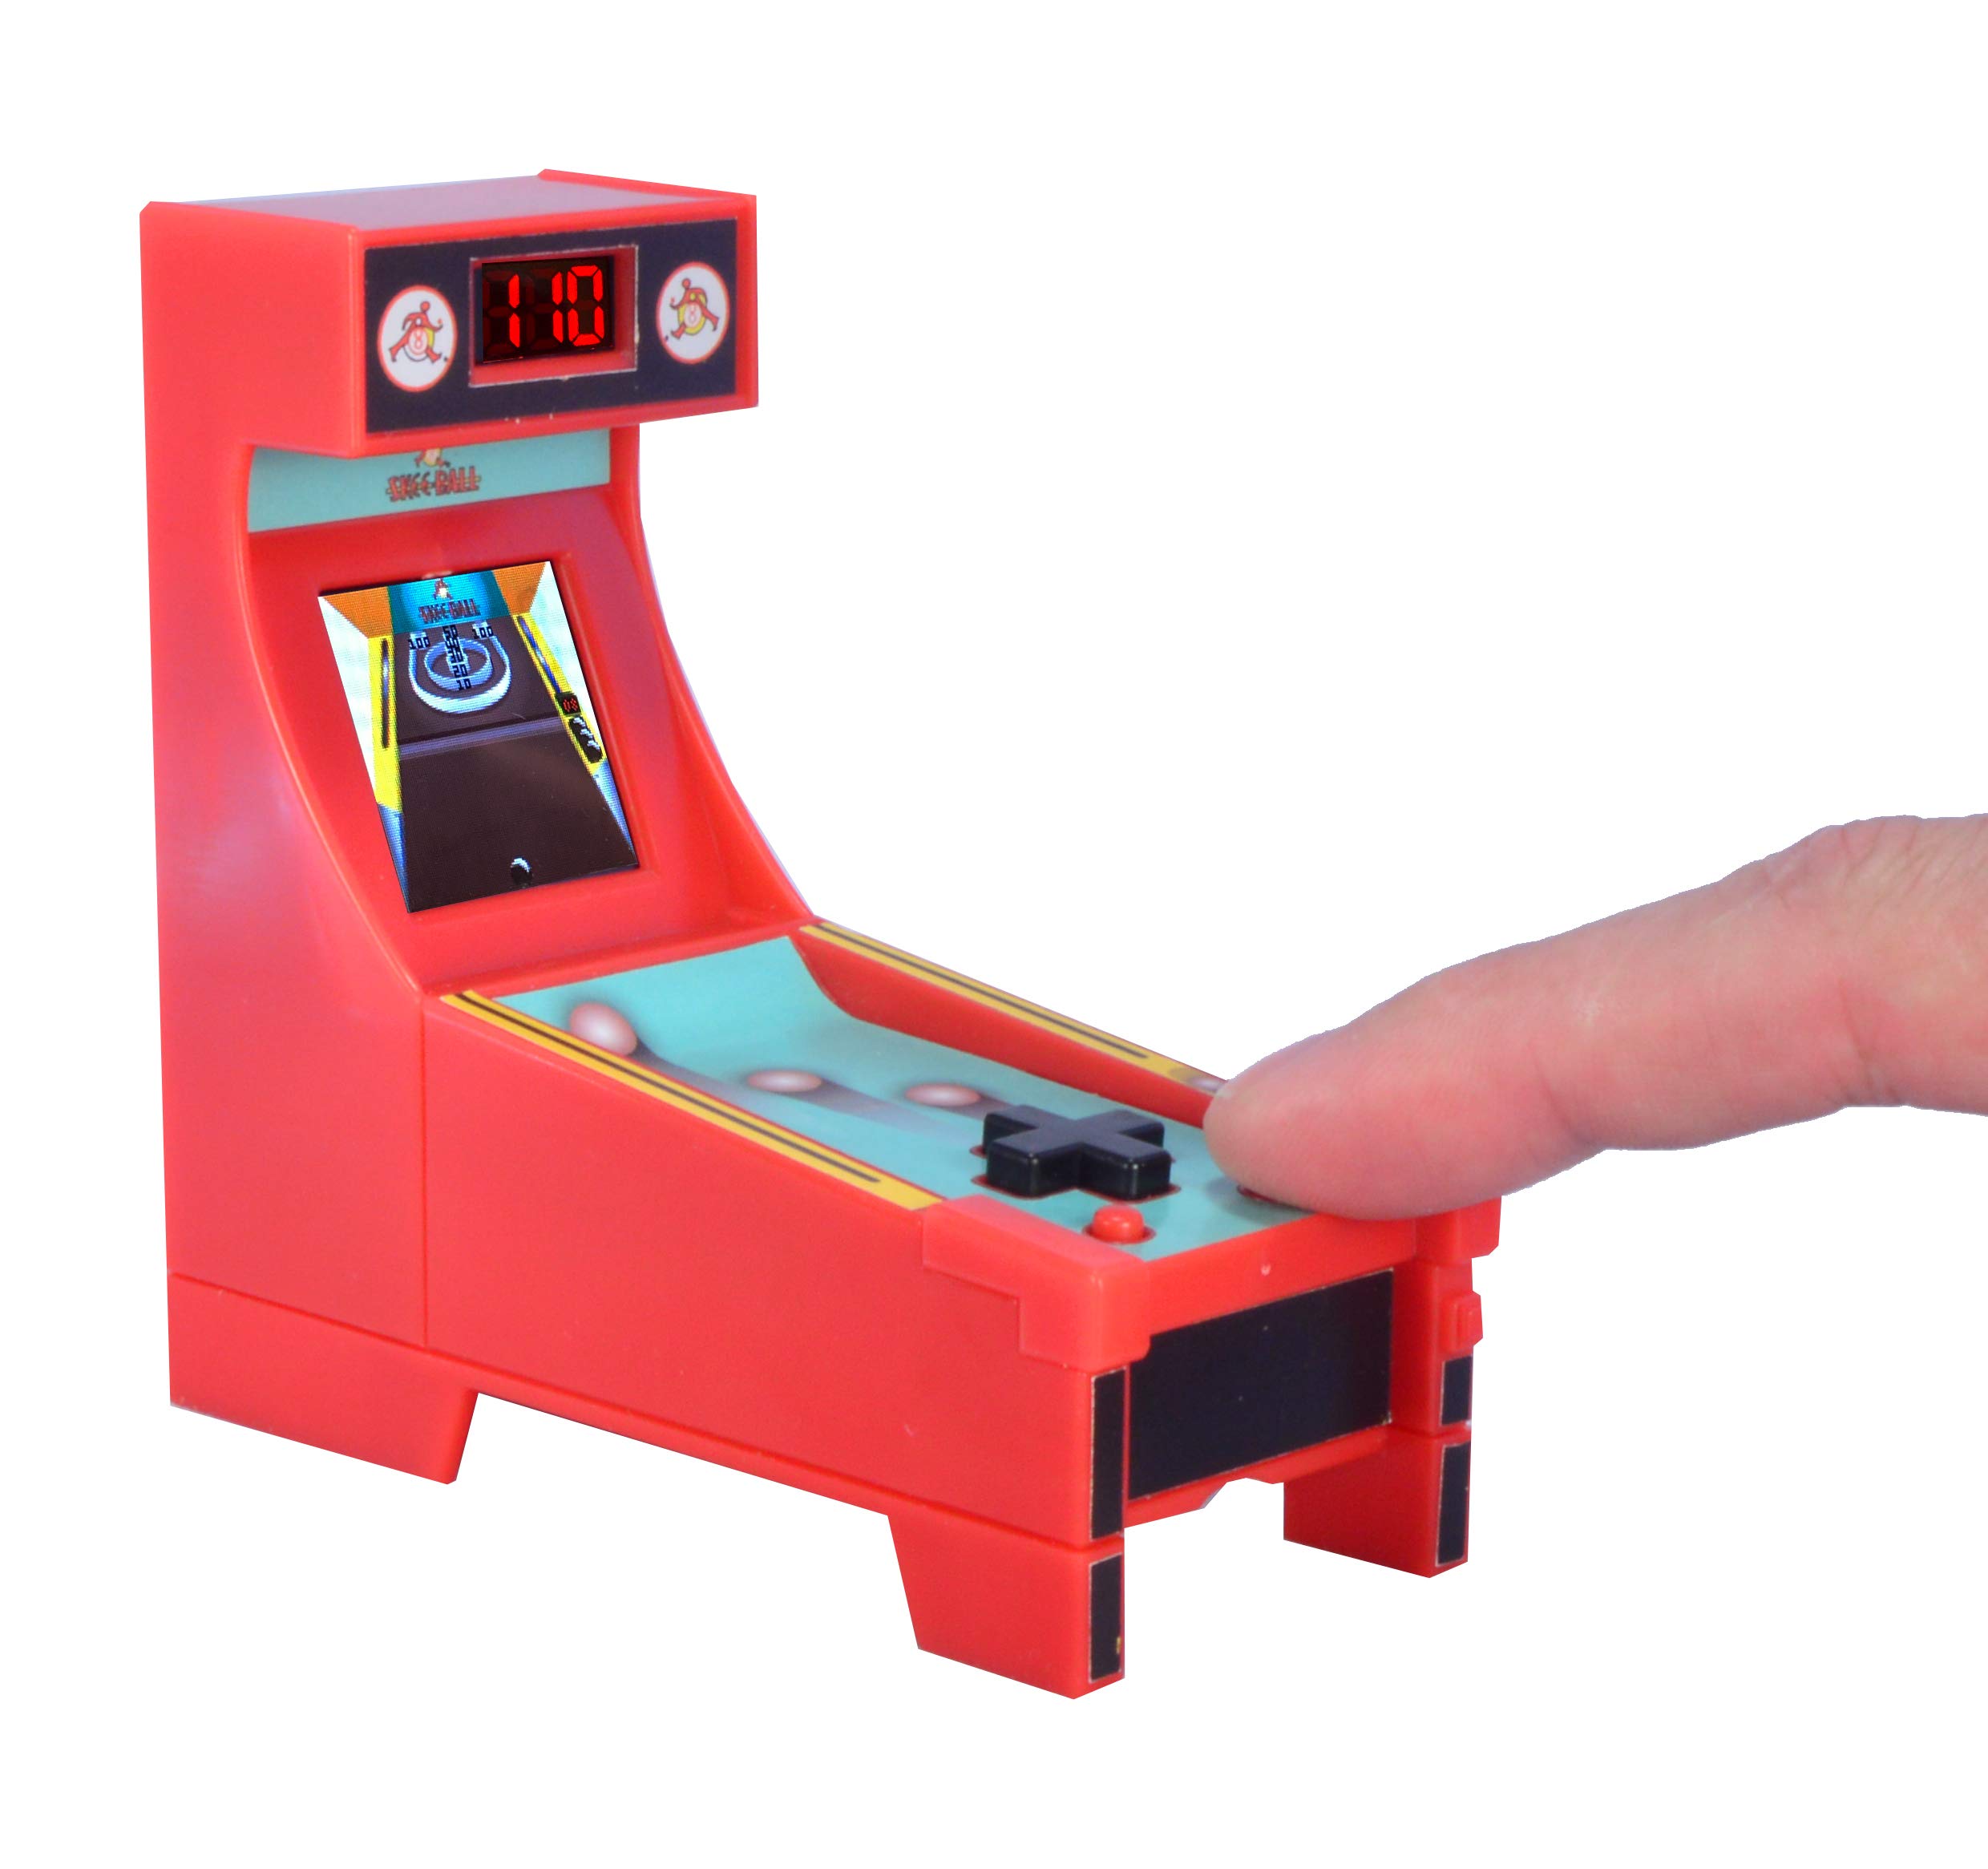 boardwalk arcade SUPER IMPULSE Boardwalk Arcade SkeeBall Mini Electronic Arcade Video Game